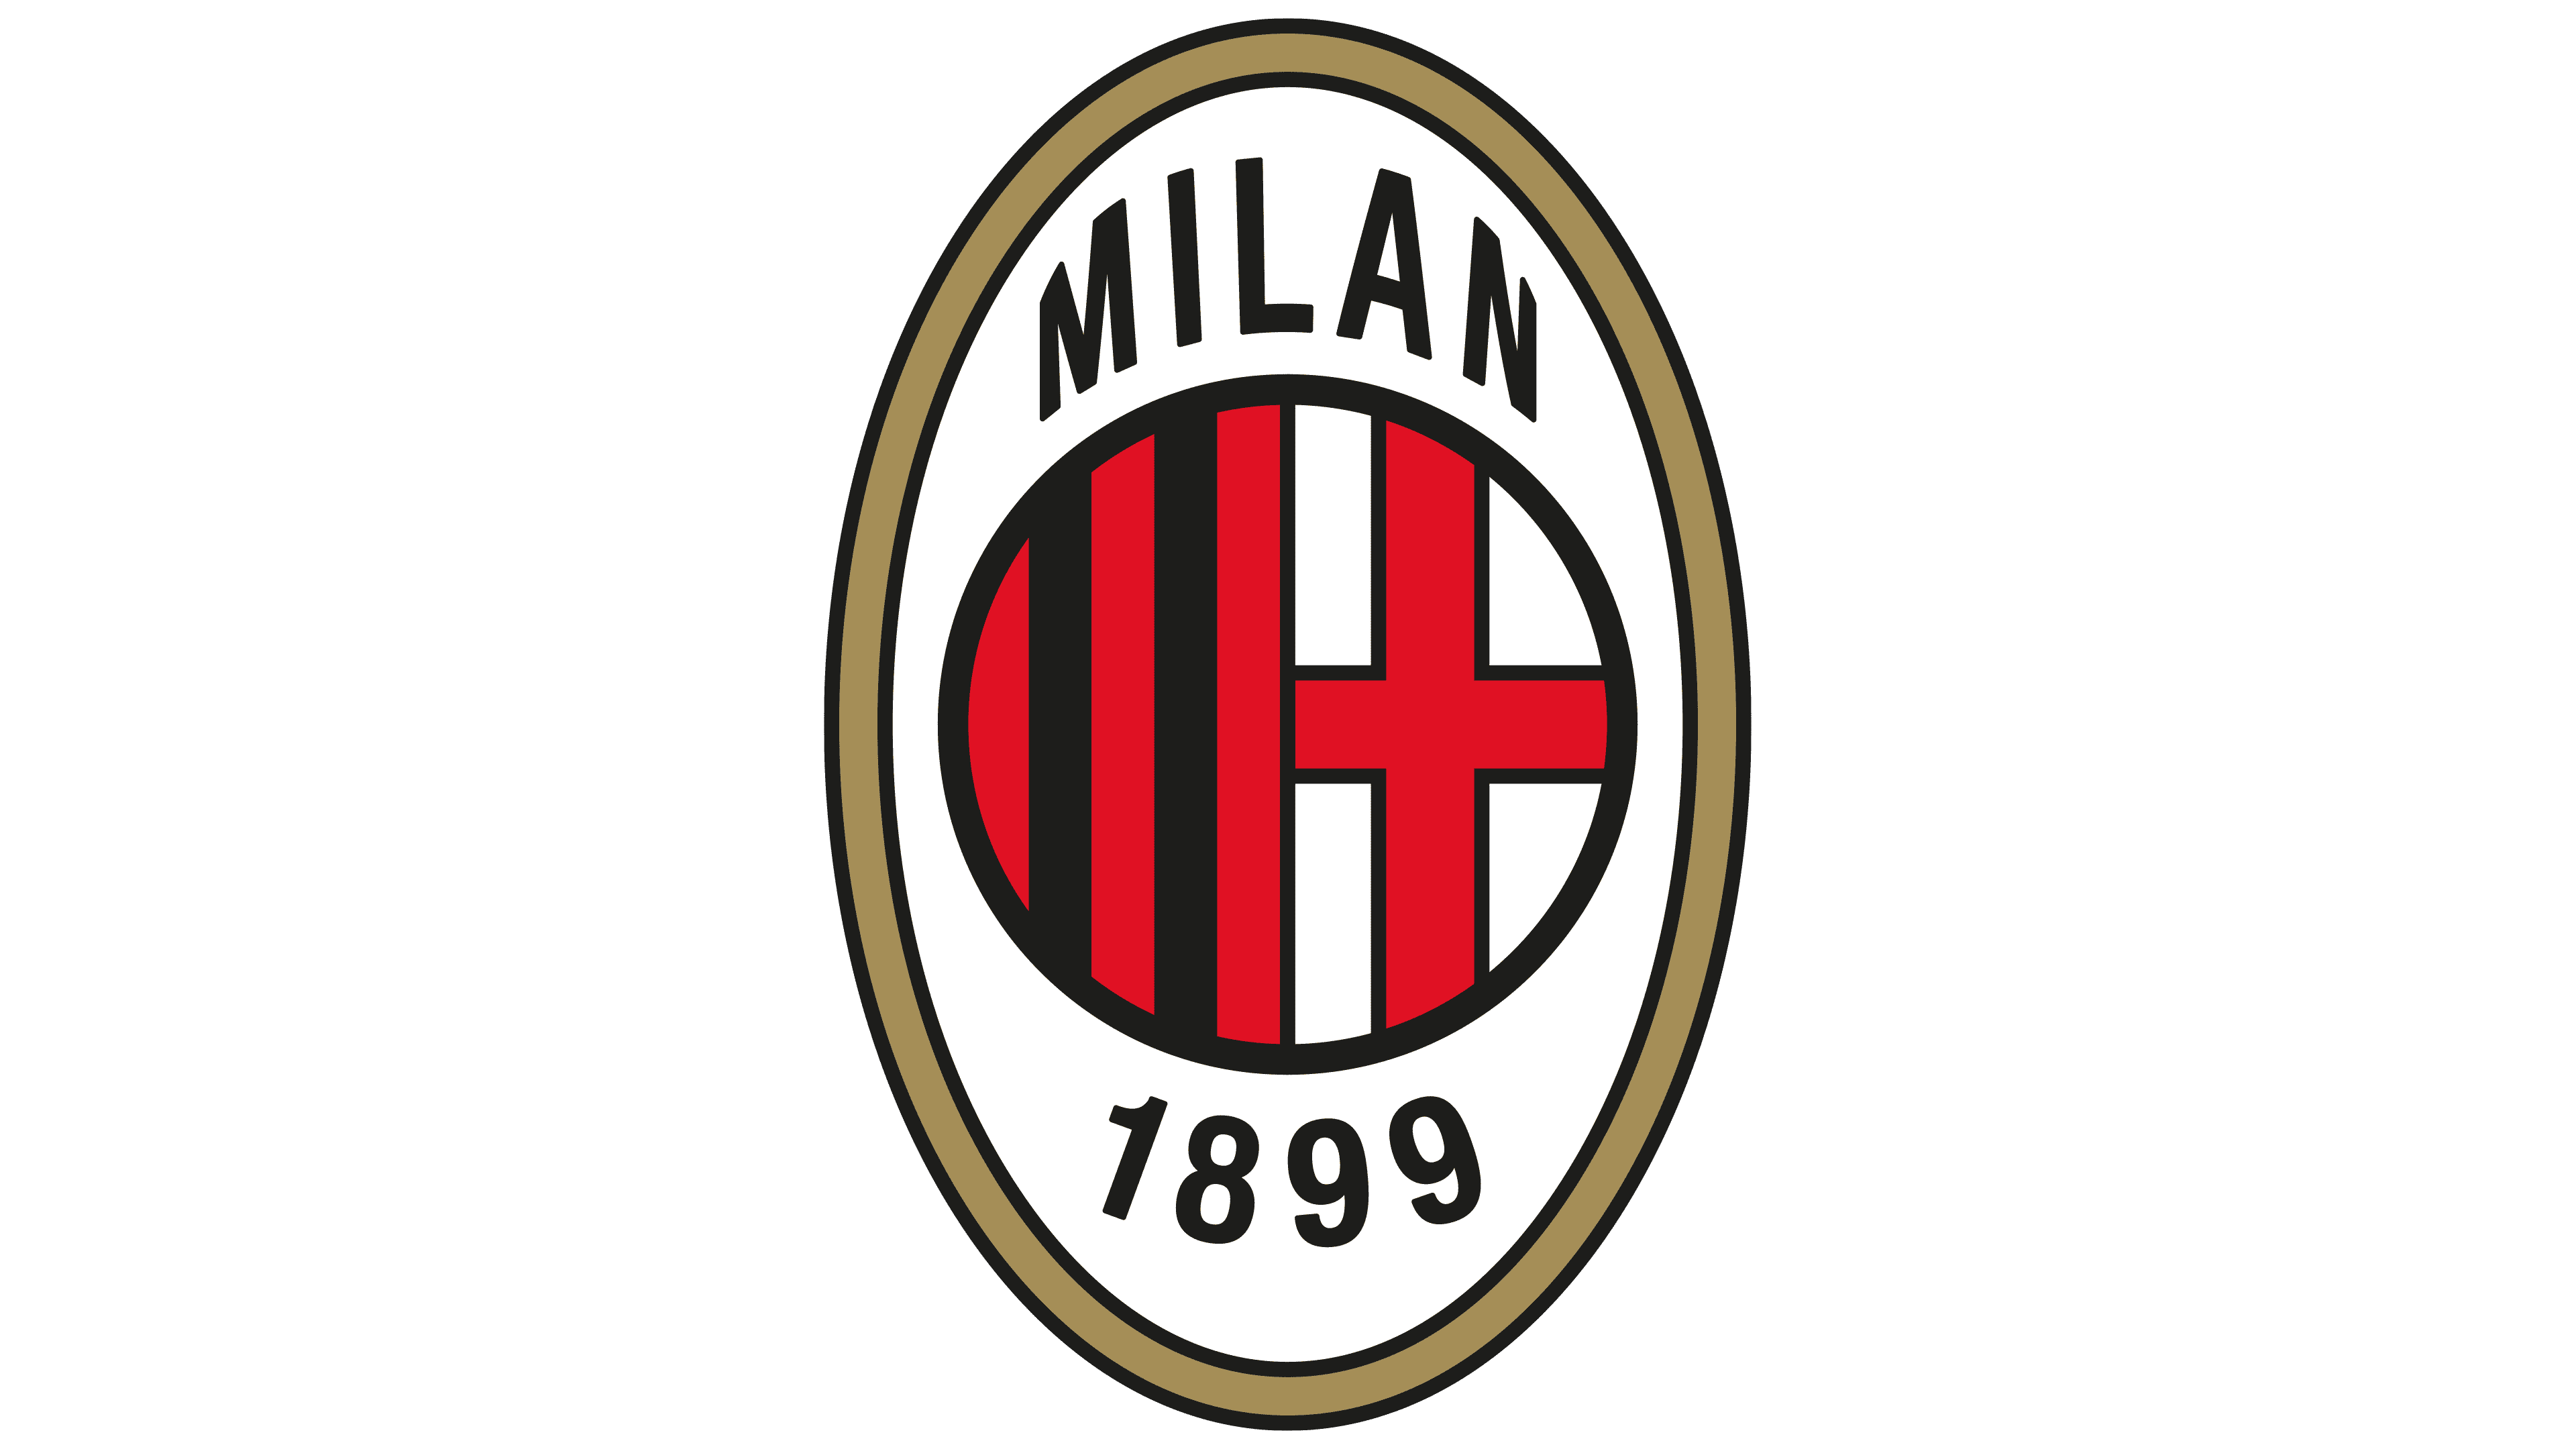 Milan symbol, meaning, history, brand